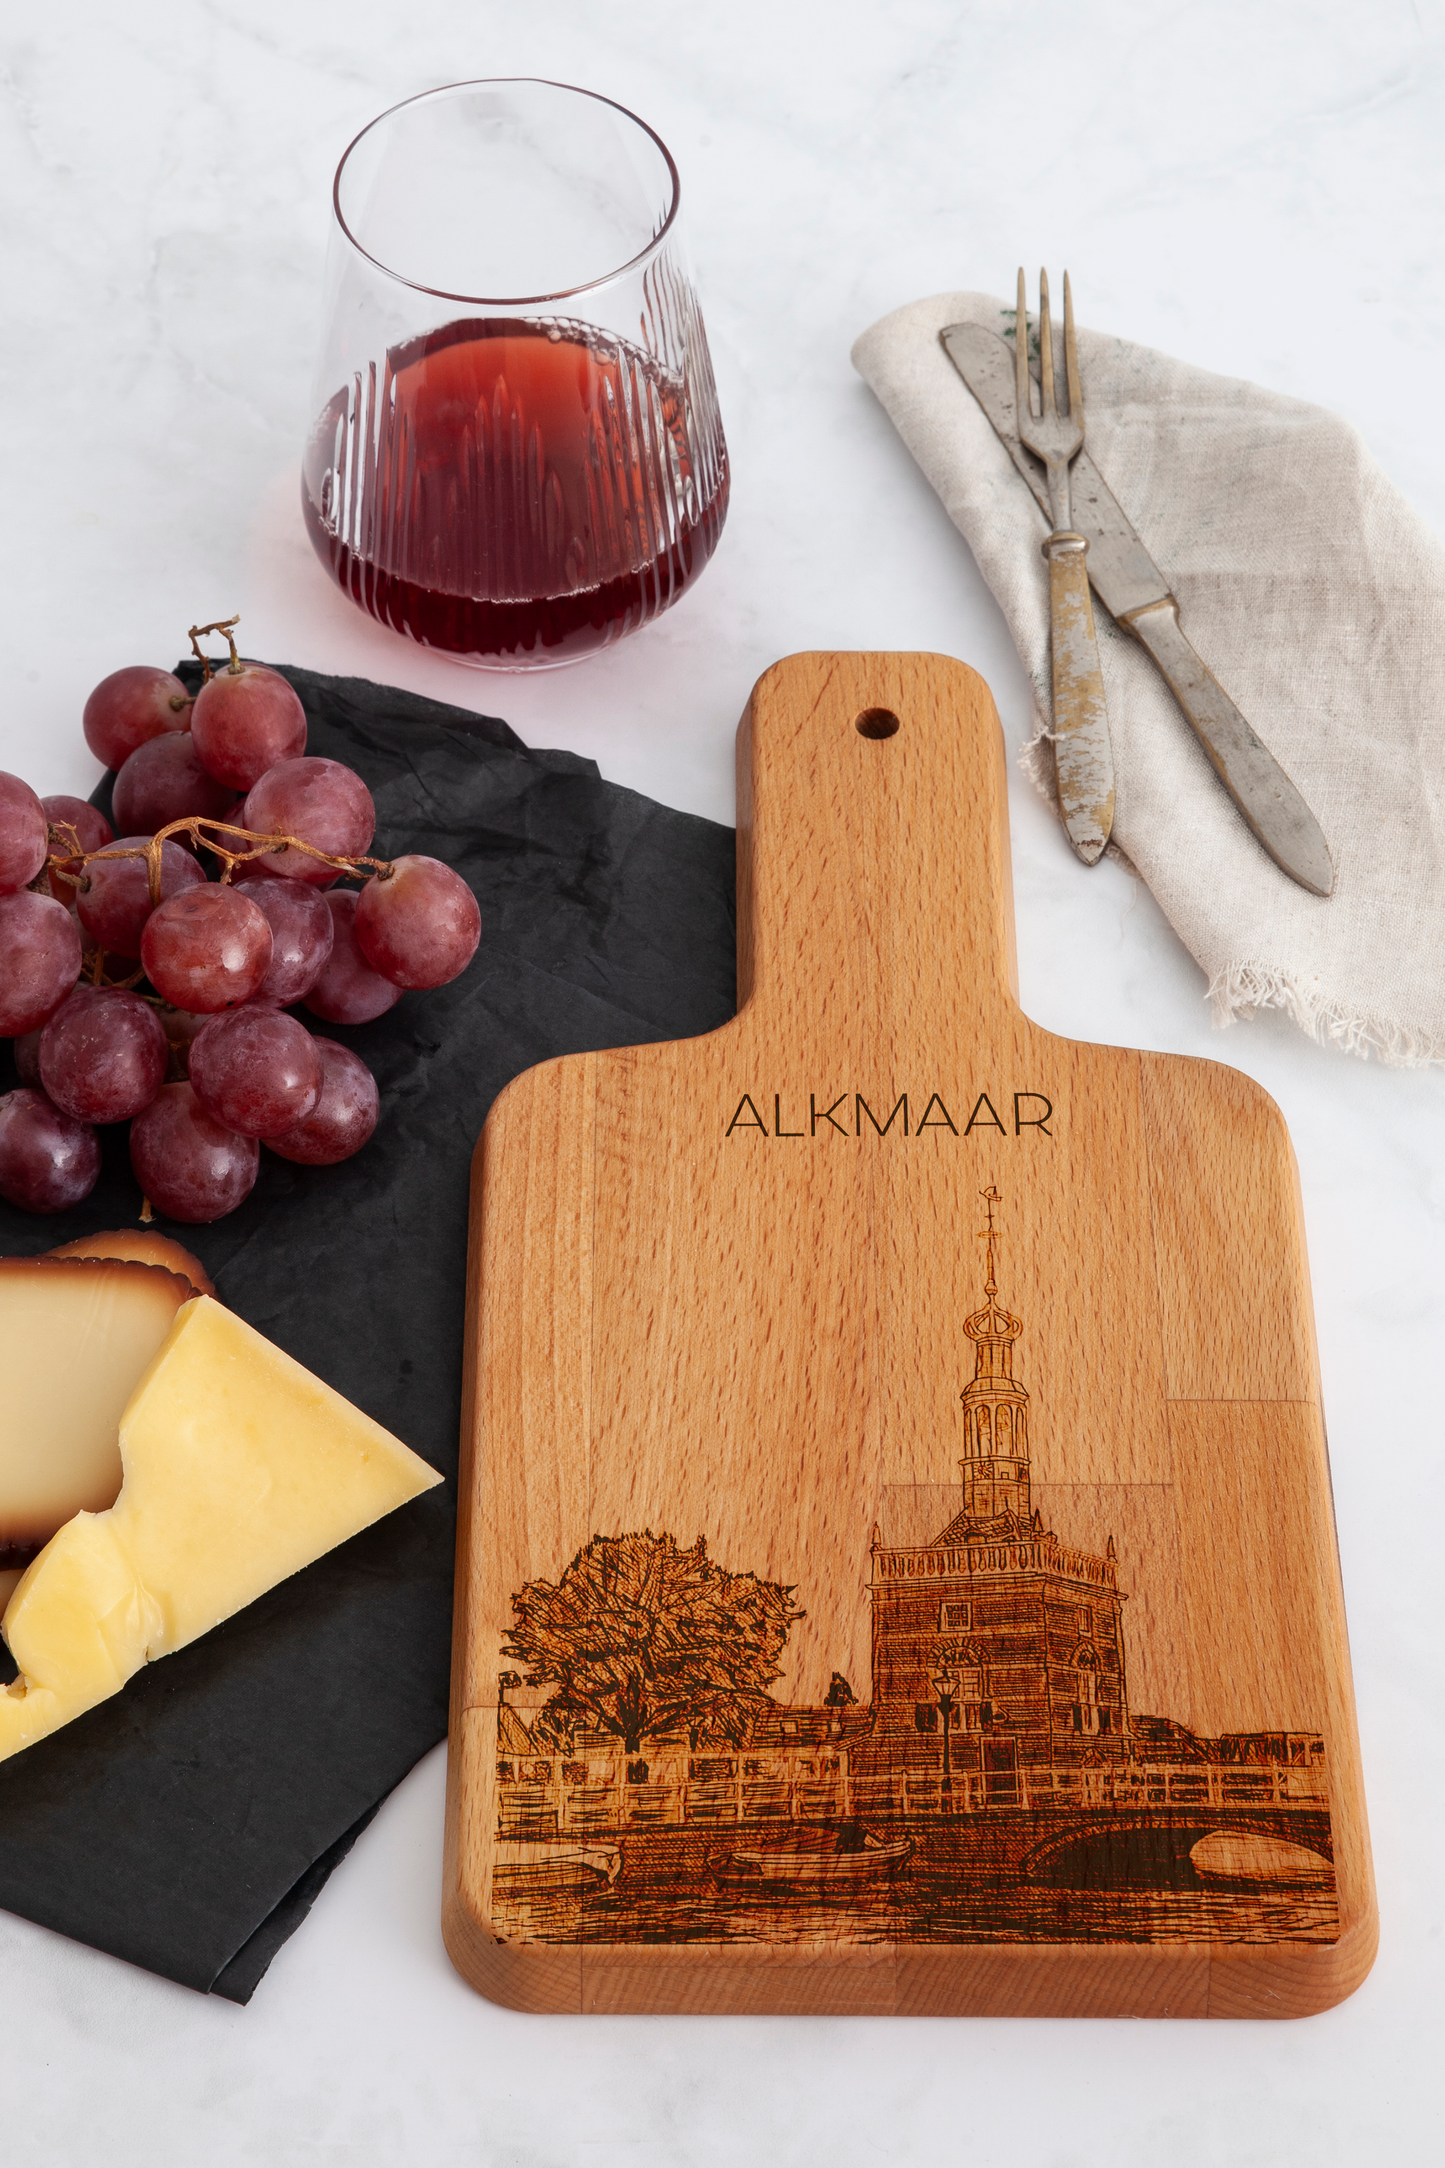 Alkmaar, De Friese Poort, cheese board, on countertop